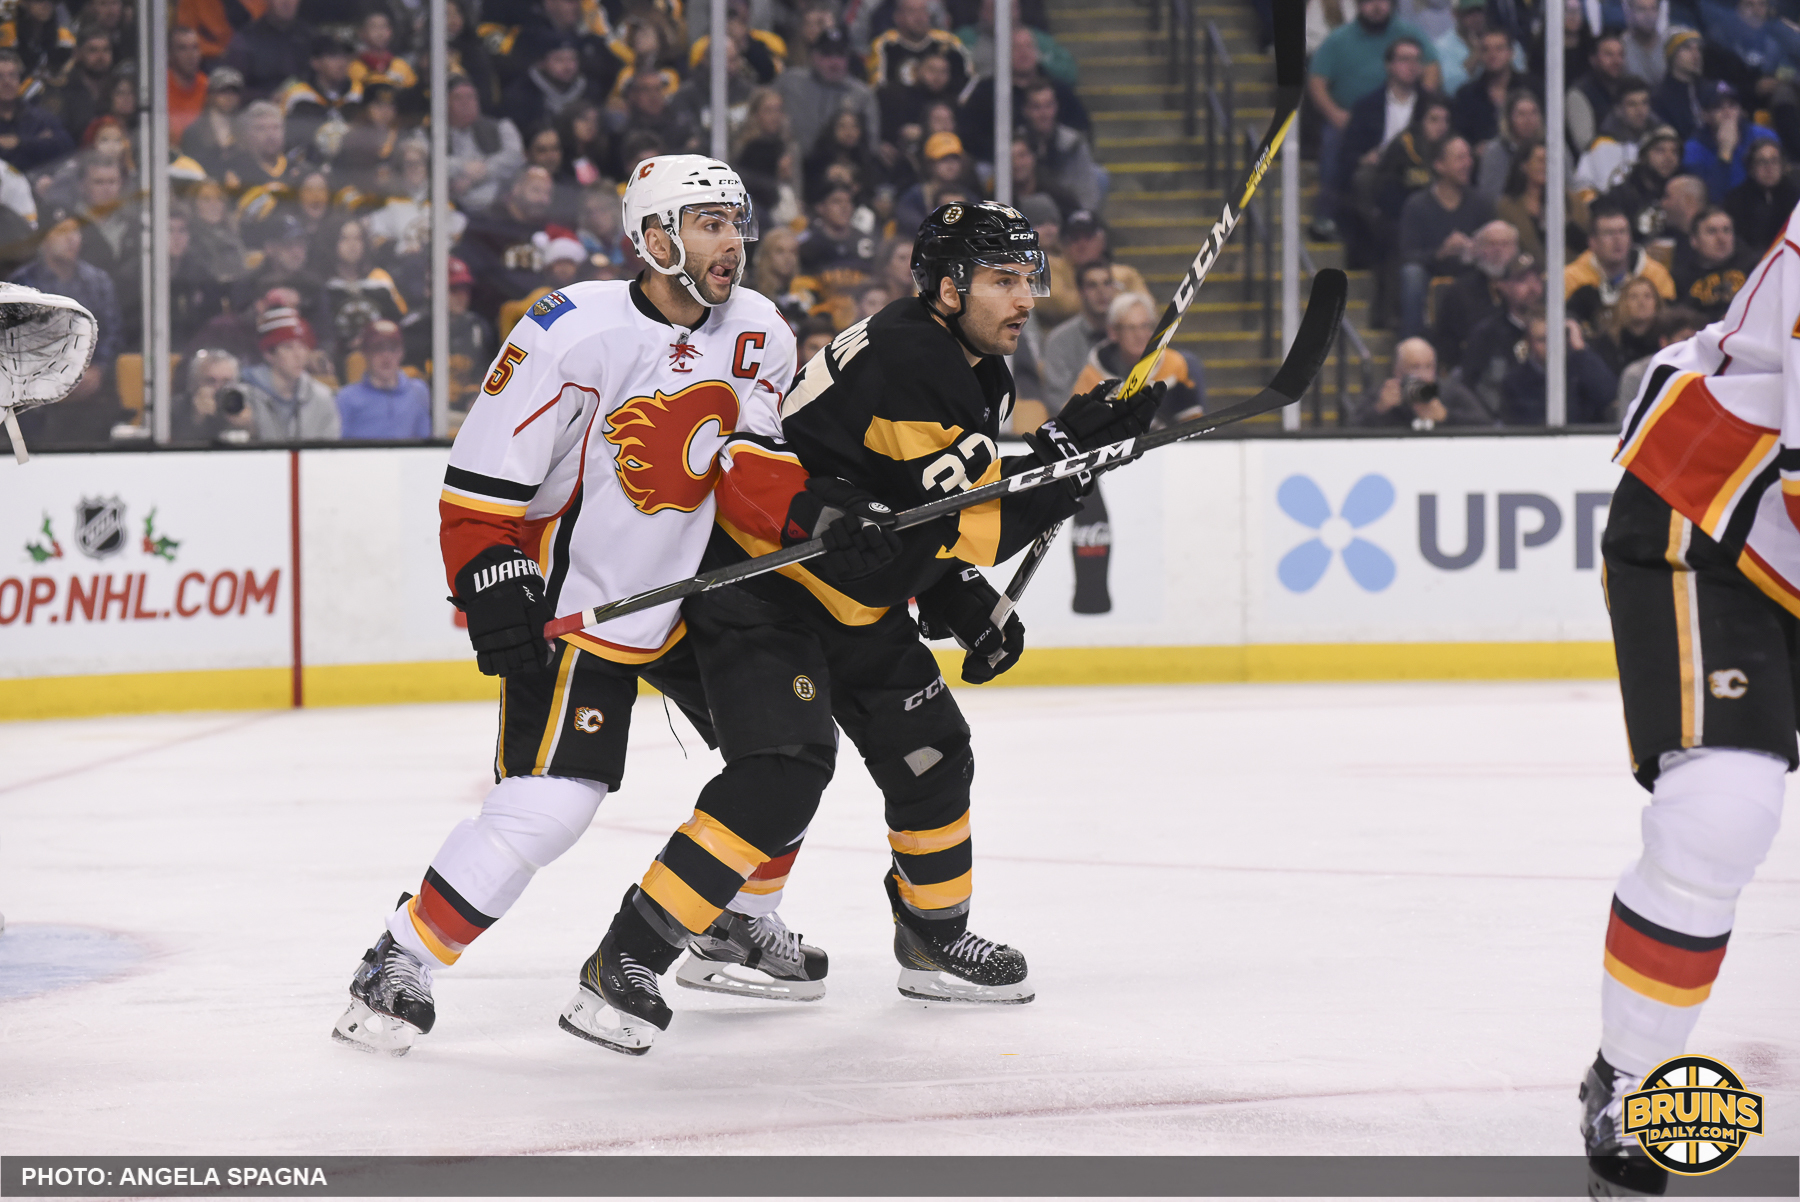 Bruins offense battling through frustrating times - Bruins Daily